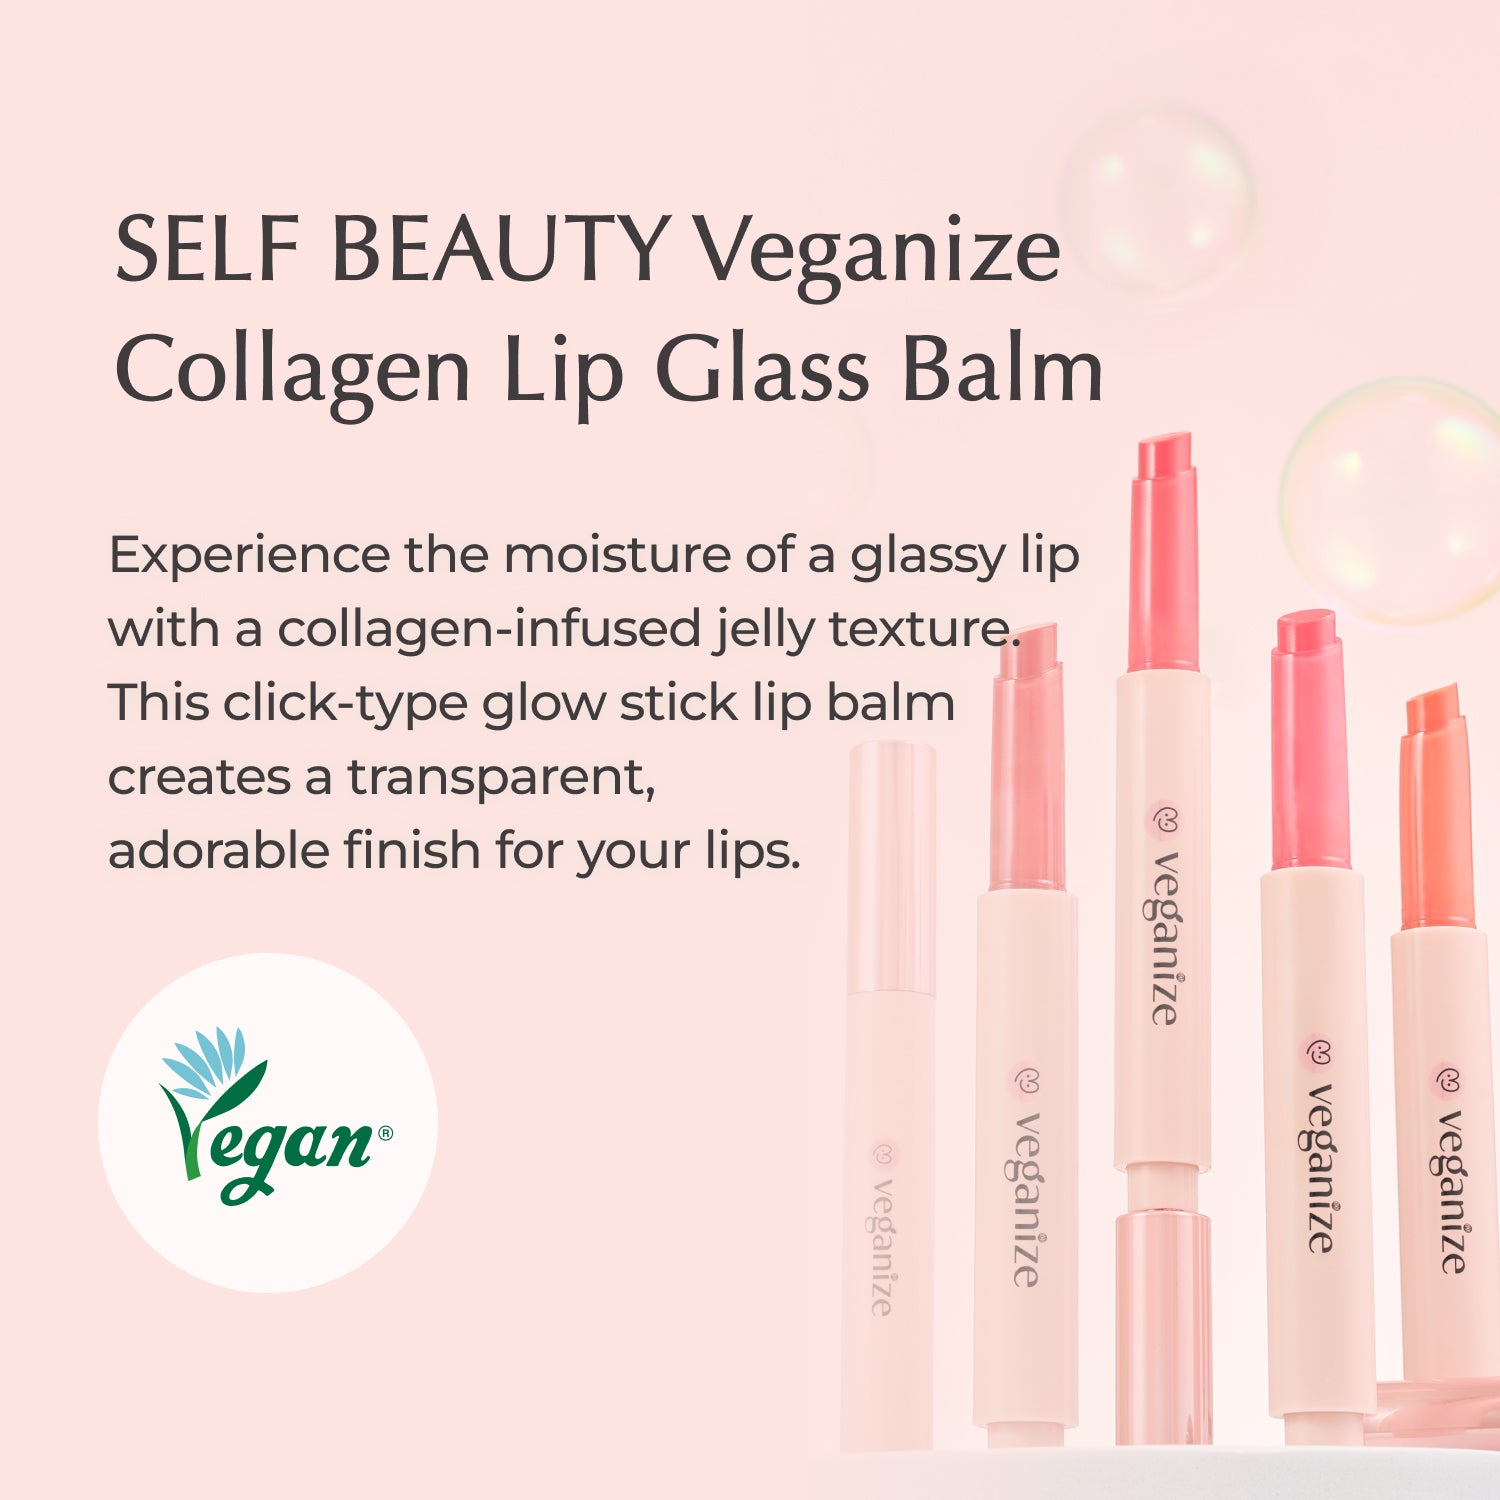 Self Beauty Veganize Collagen Lip Glass Balm(9colors) 0.06oz - Vegan Cruelty Free - SELF BEAUTY